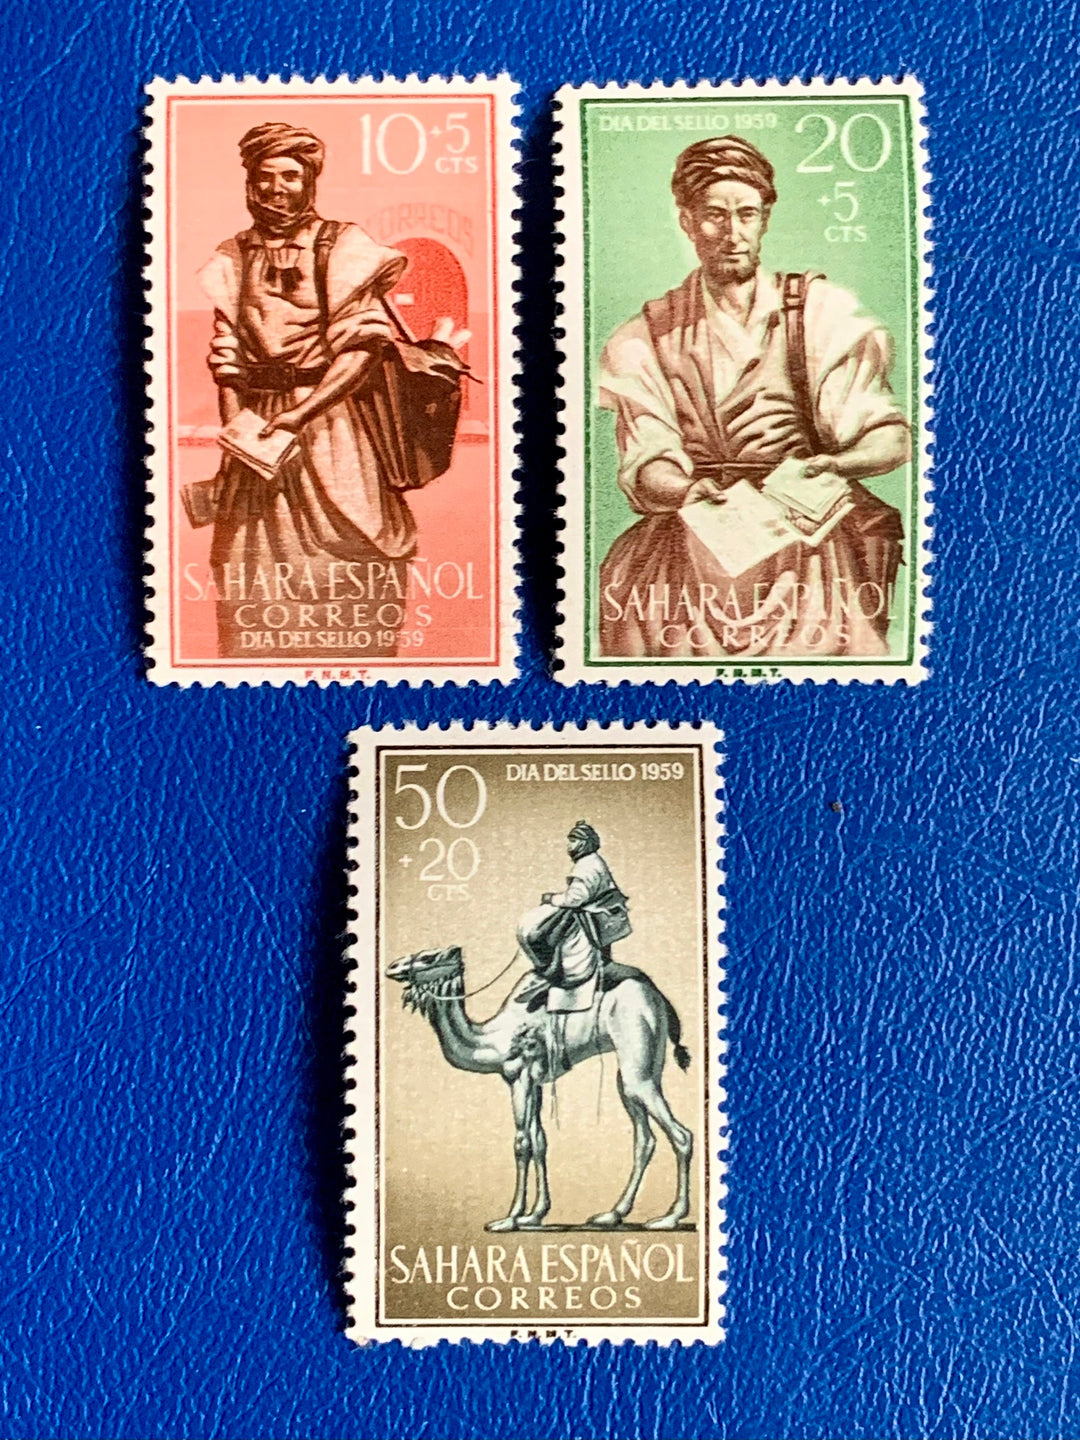 Sp. Sahara - Original Vintage Postage Stamps- 1959 - Postmen (Stamp Day) - for the collector, artist or crafter